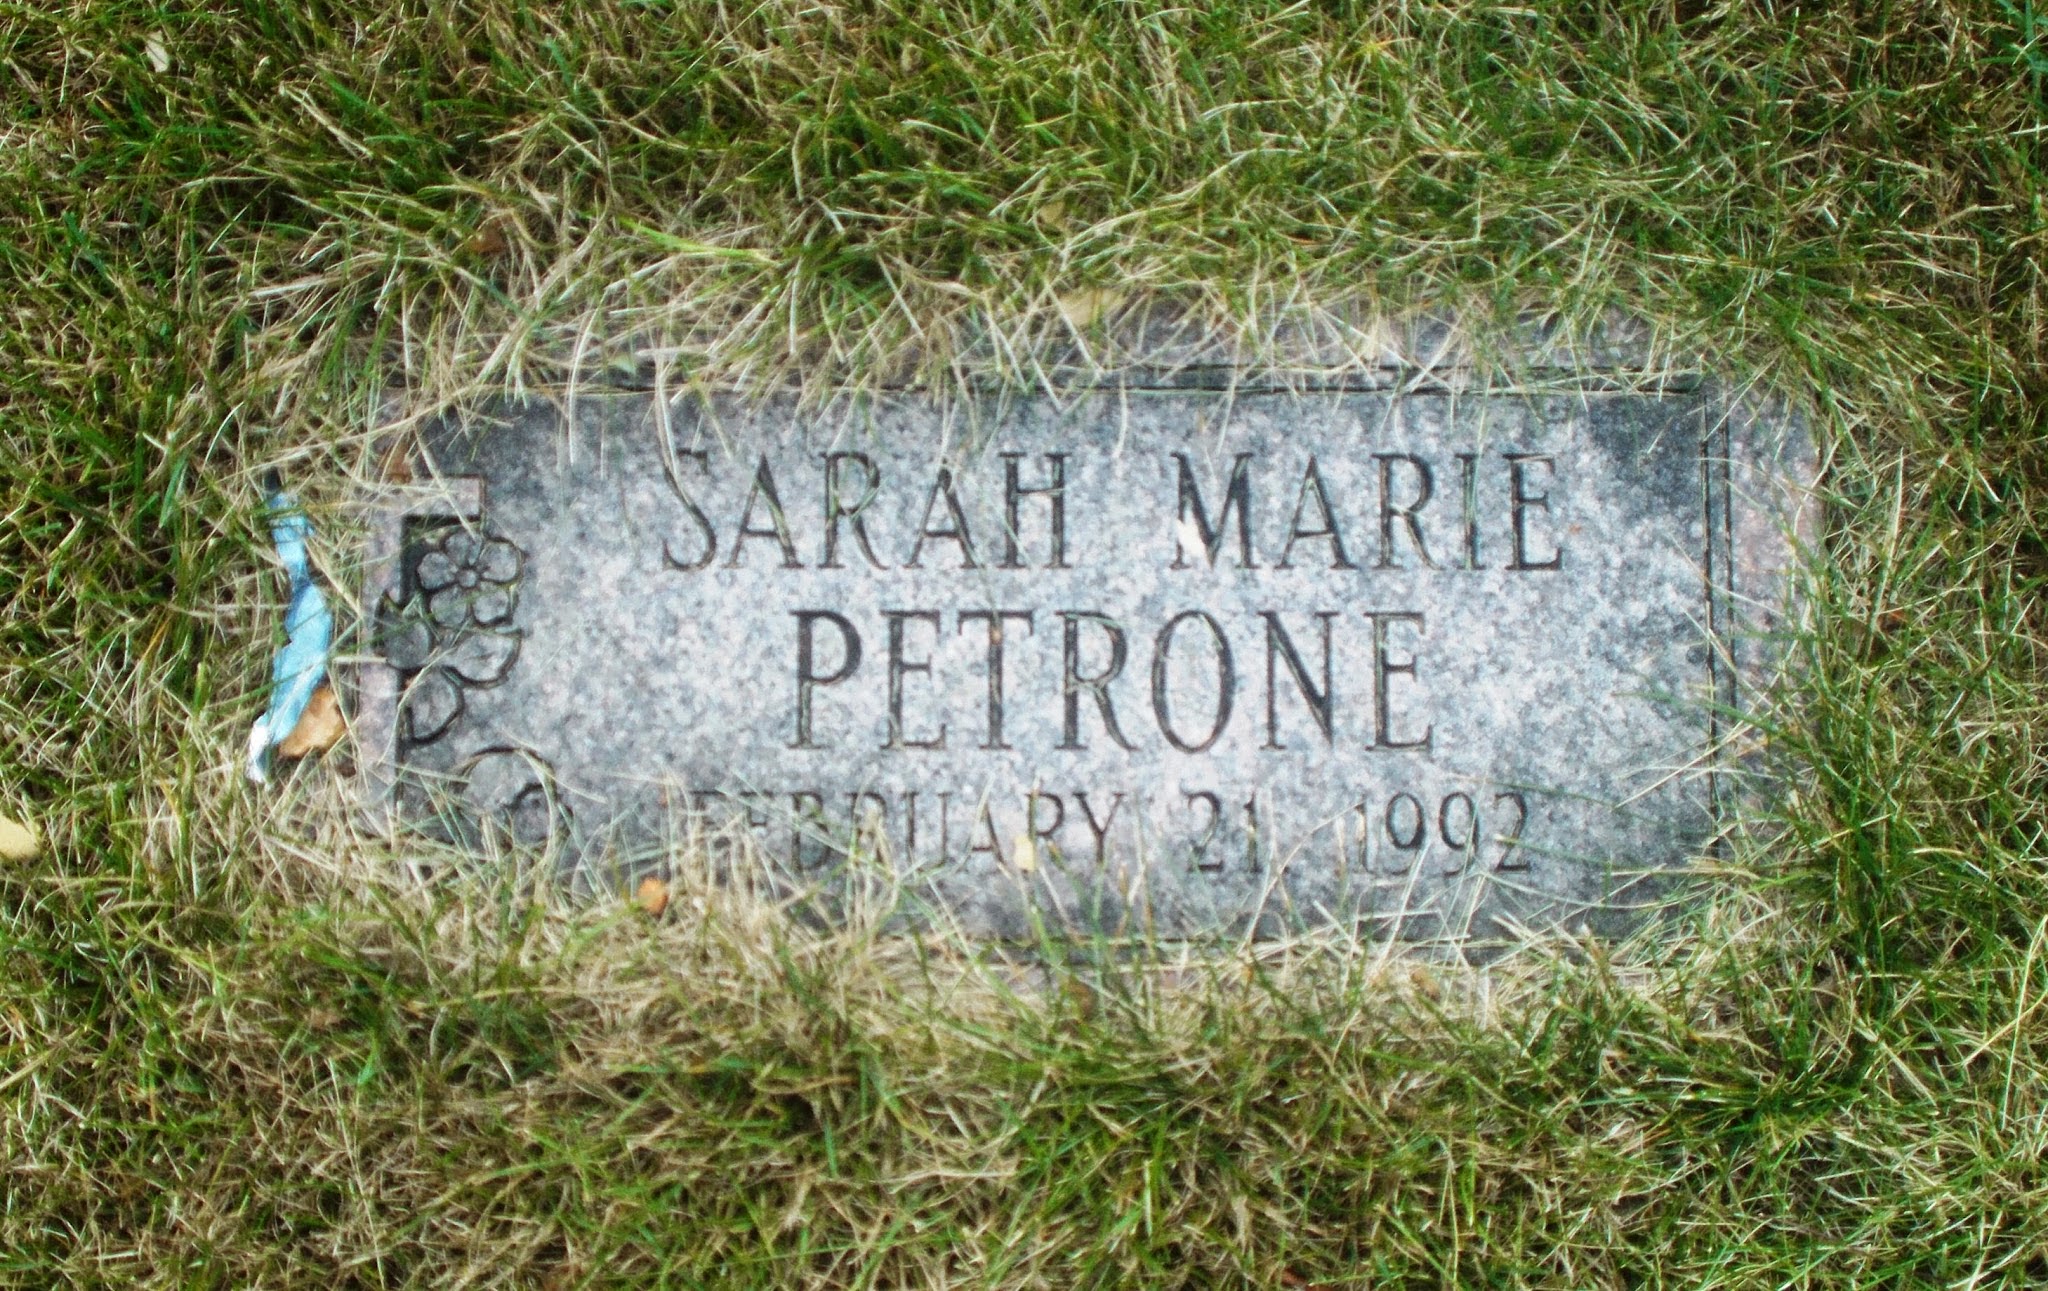 Sarah Marie Petrone